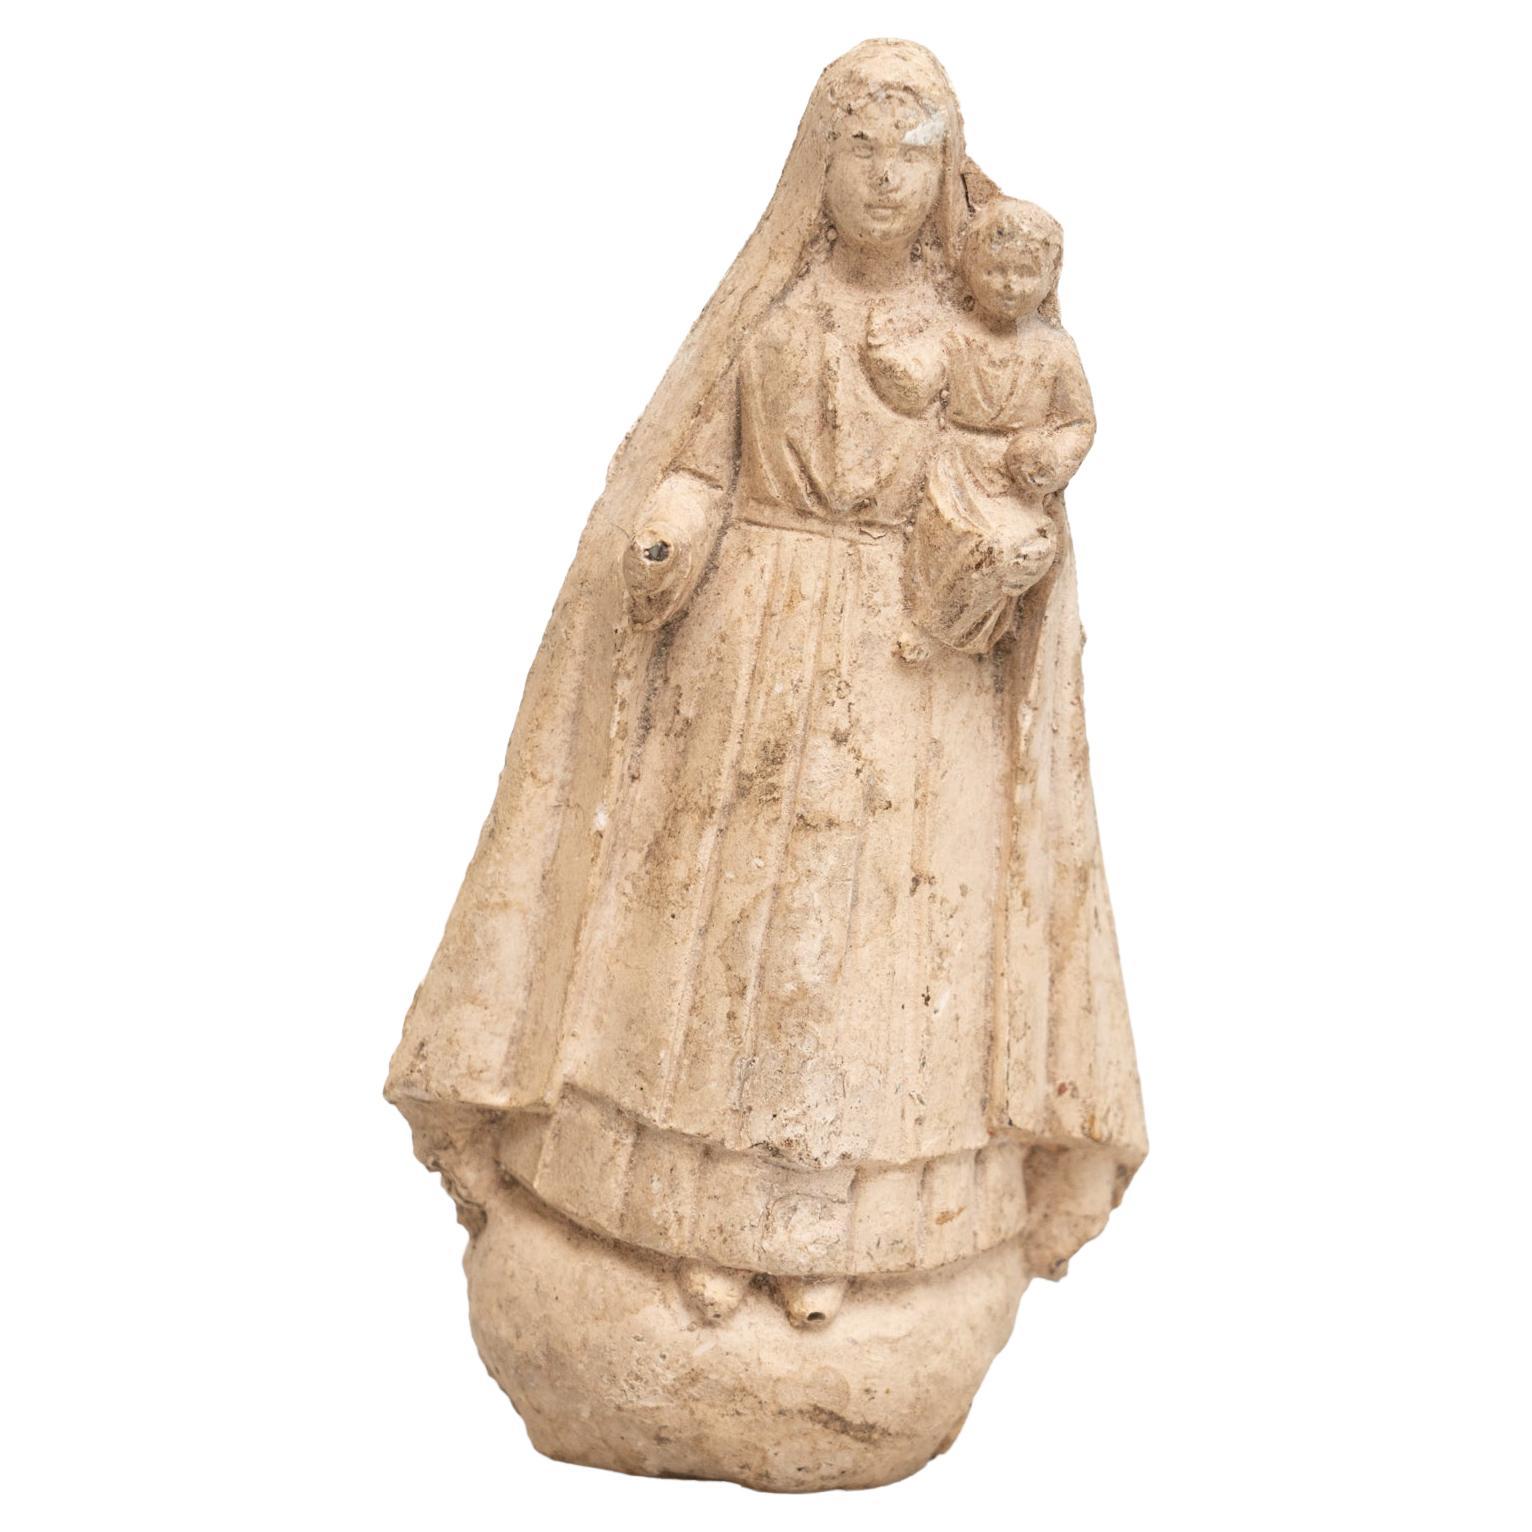 Traditionelle Jungfrauenfigur aus Gips, um 1950